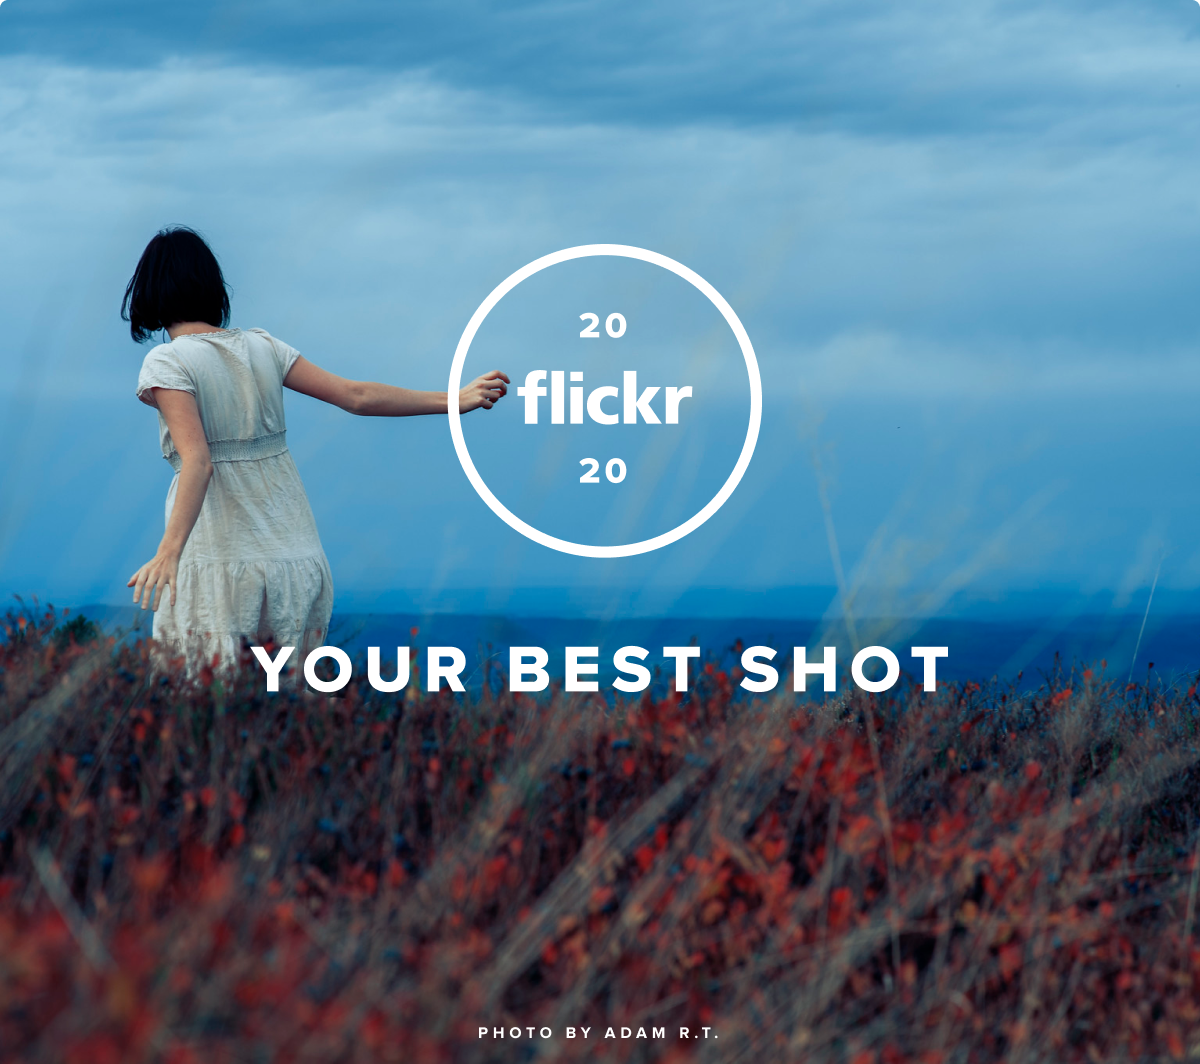 Flickr 最糟糕失敗影像、最佳影像攝影比賽